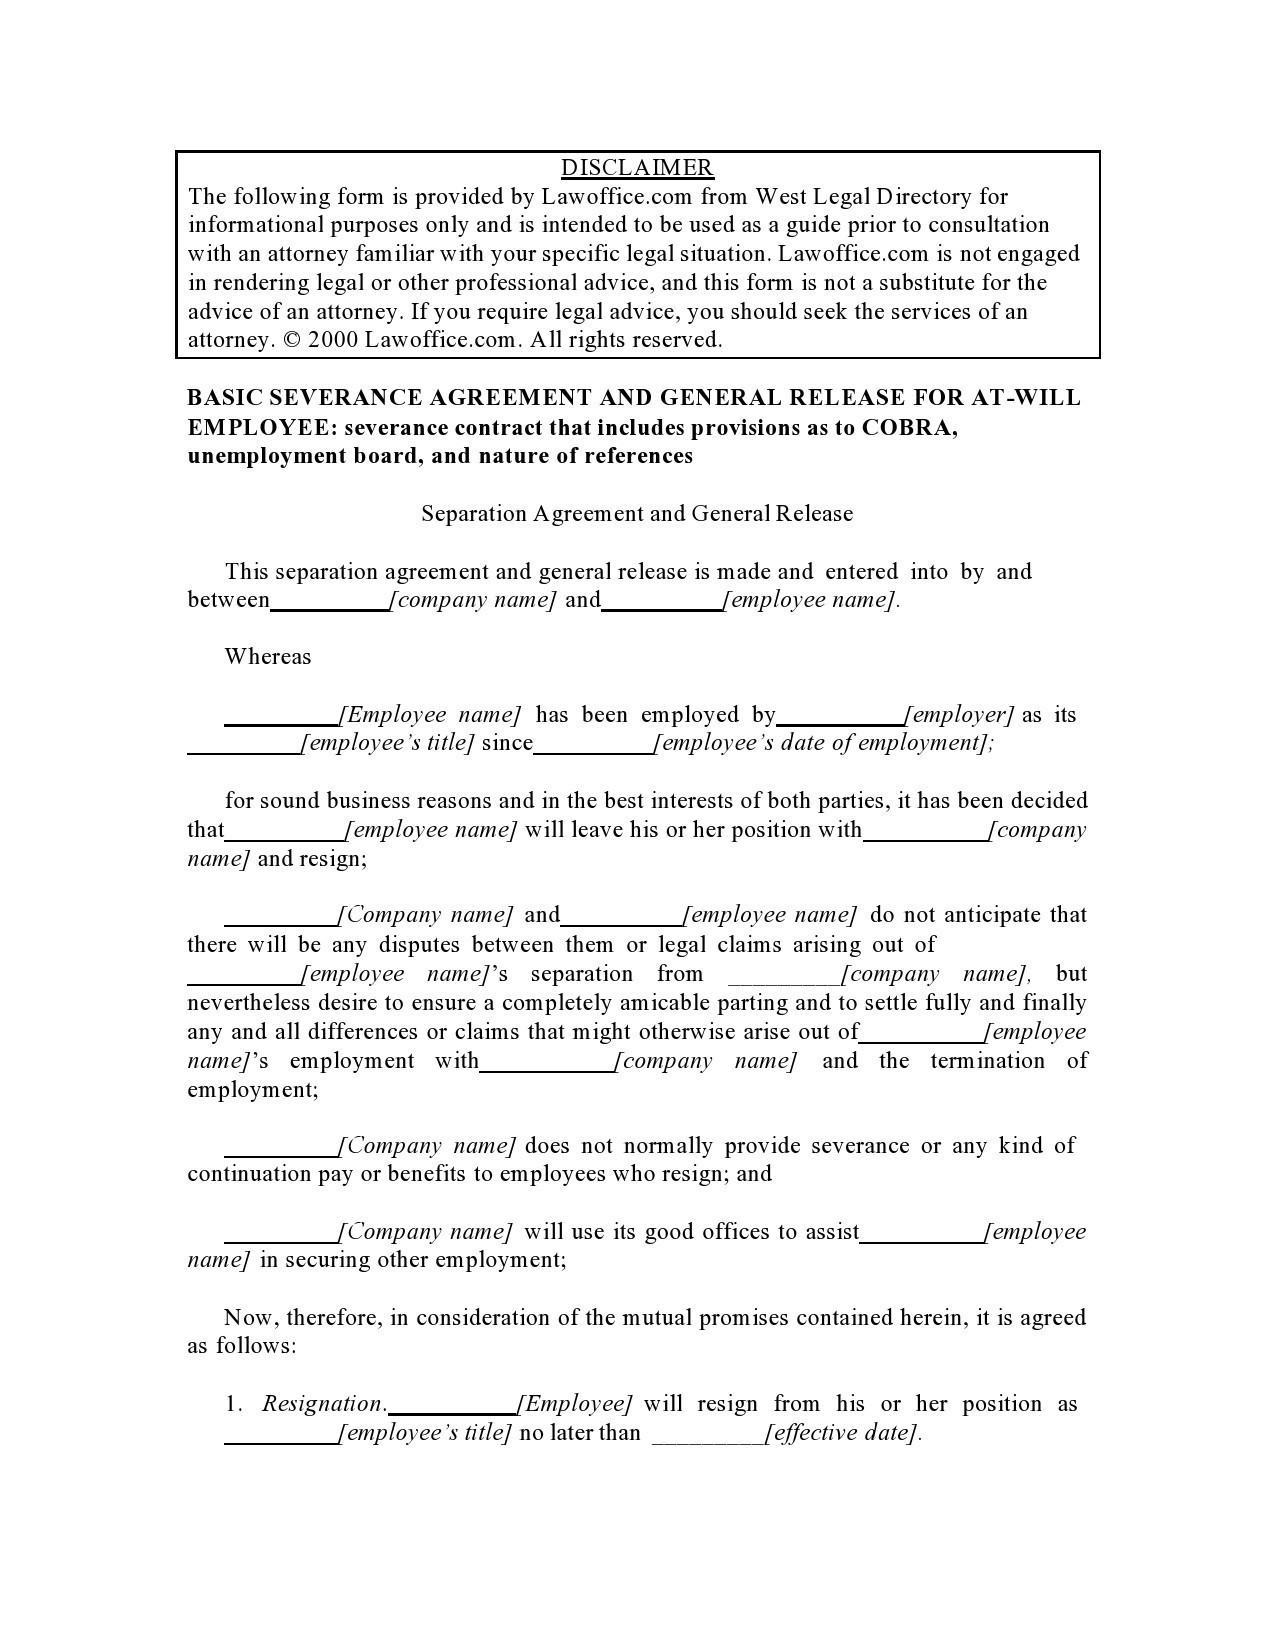 Free severance agreement template 37